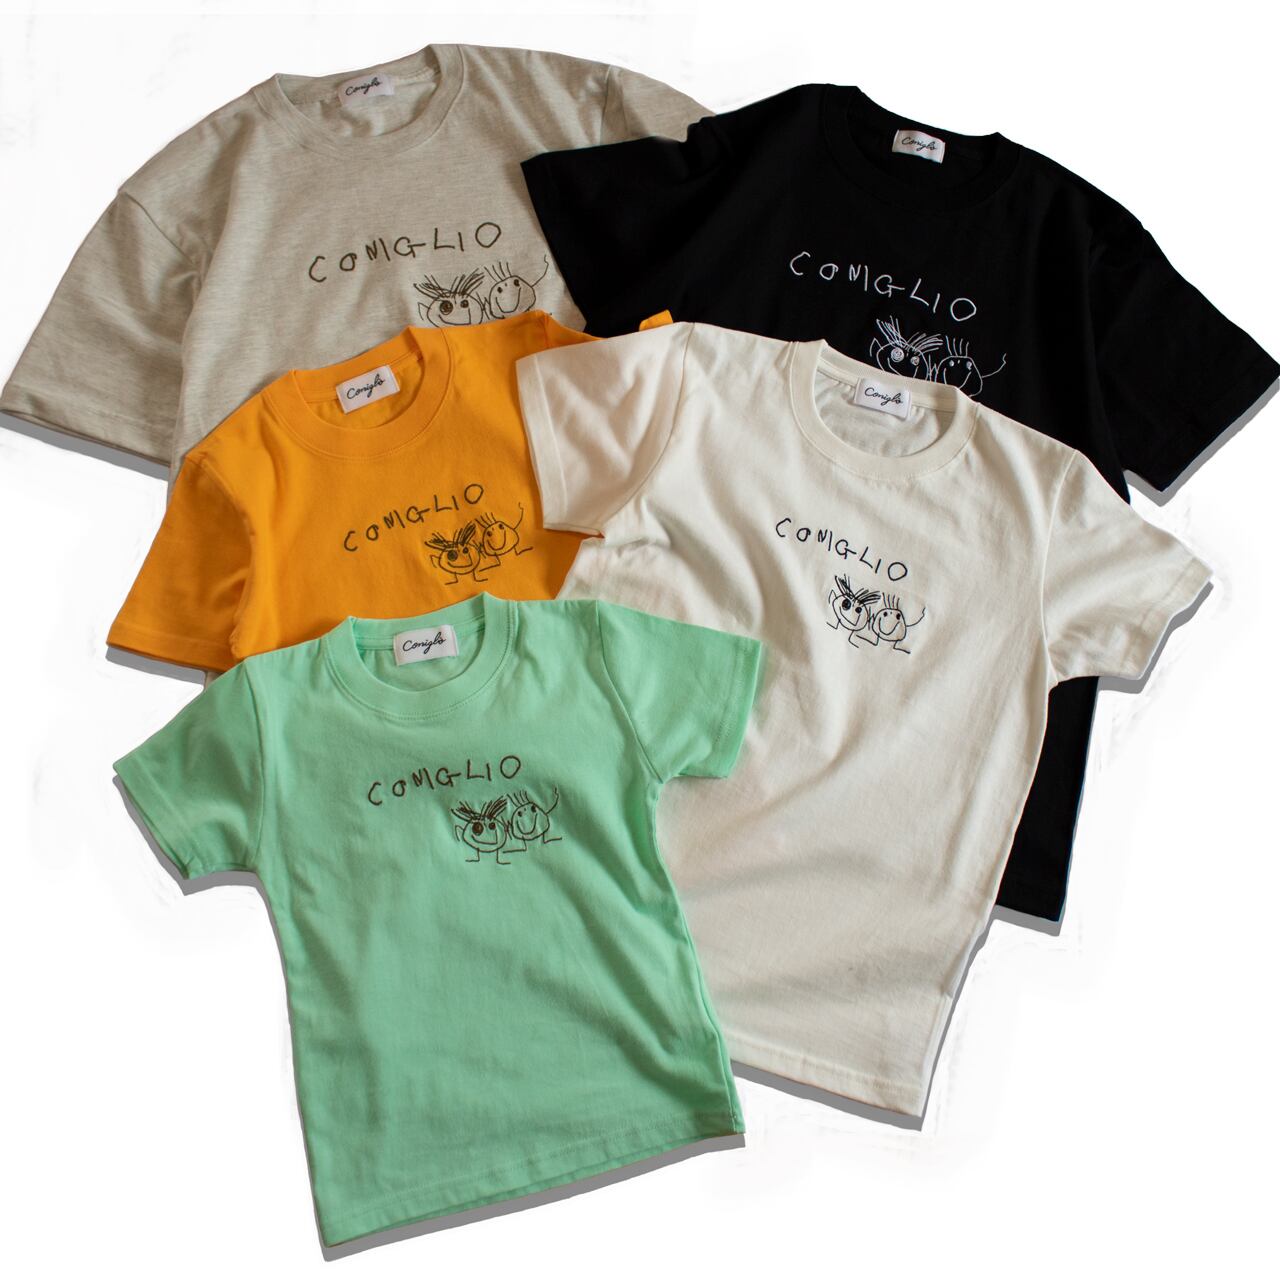 Coniglio キッズサイズ手書きロゴとイラストtシャツ Coniglio コニーリョ 子供服